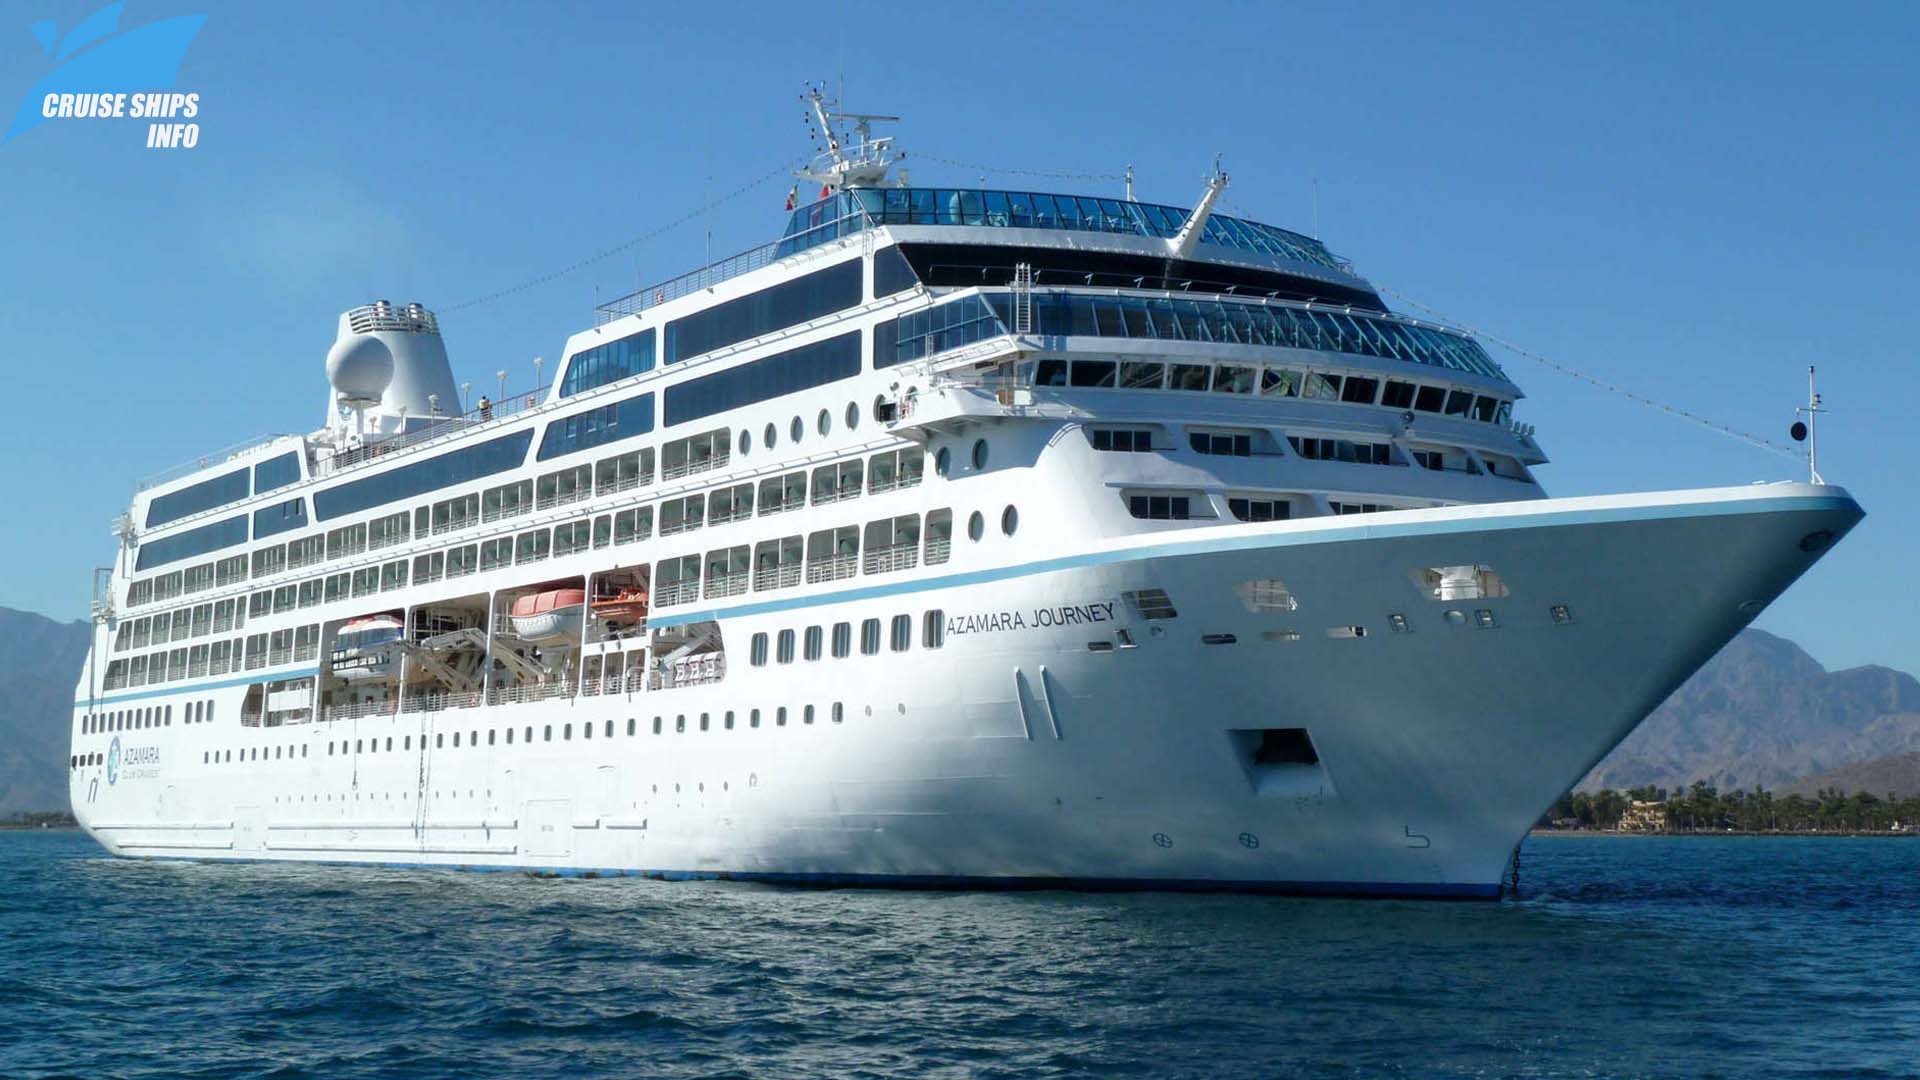 Azamara Journey Cruise Ship Tour - Azamara Club Cruise Line - YouTube